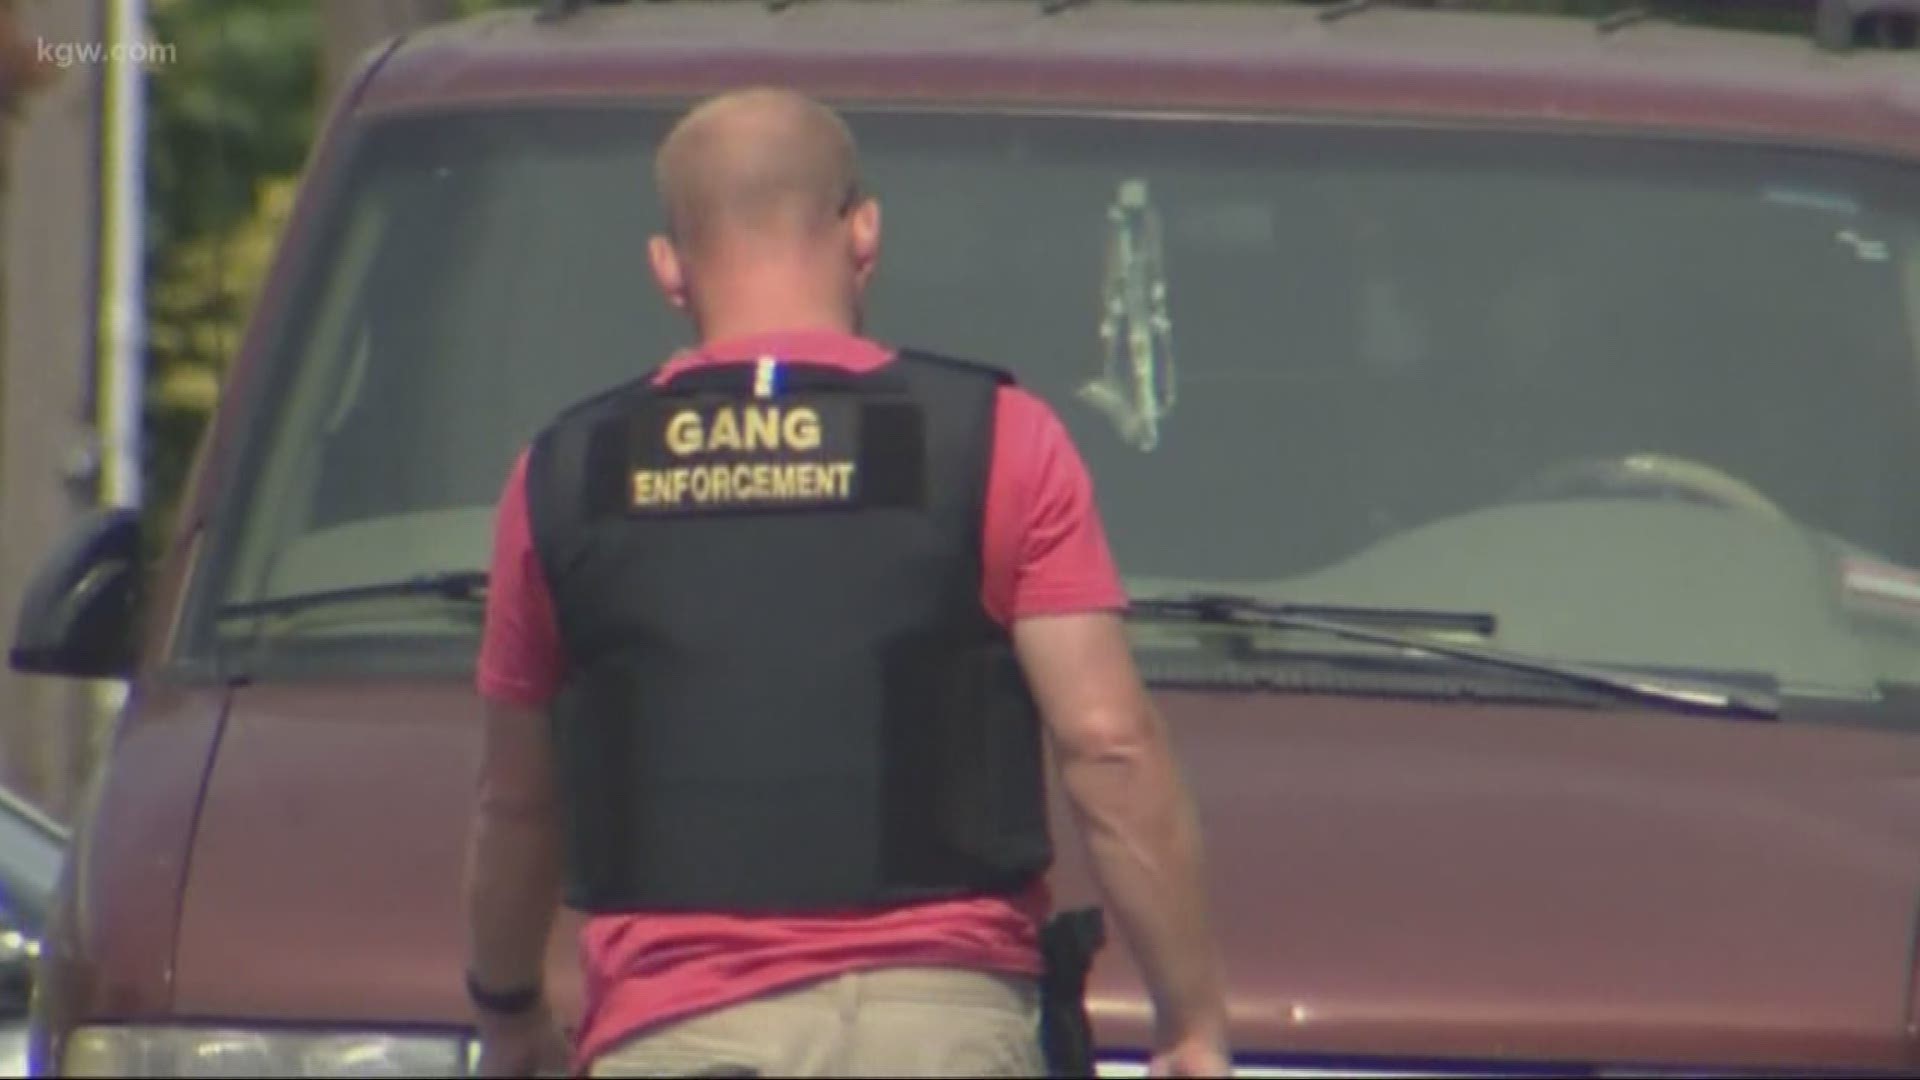 Portland police maintain a list of gang members.